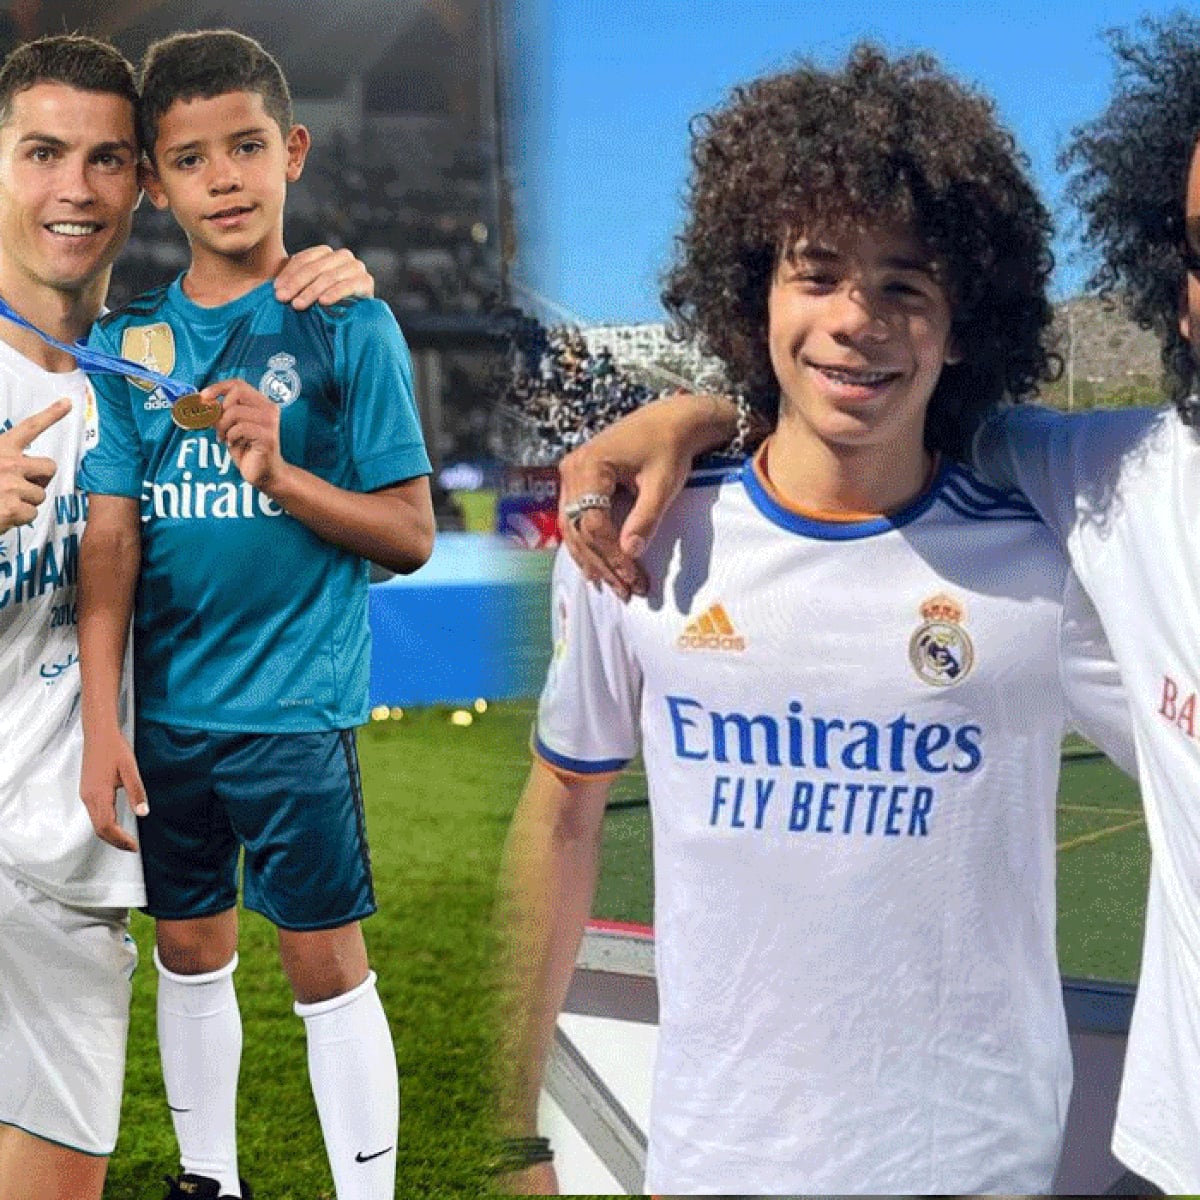 Camiseta Niño Real Madrid, Ronaldo Champions